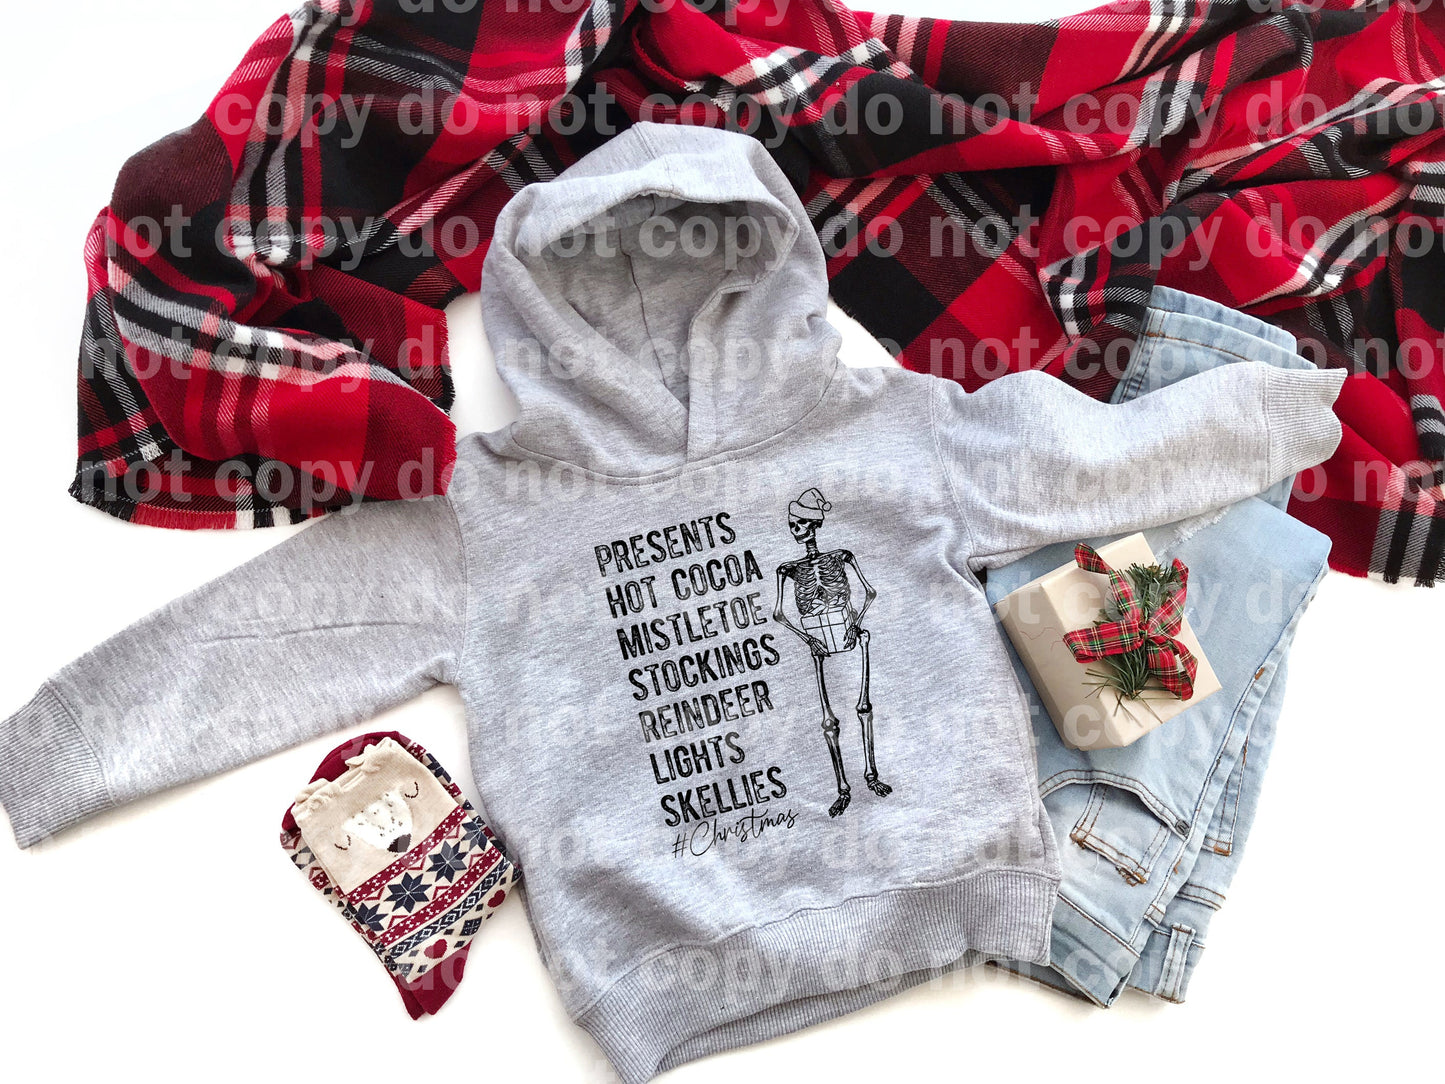 Presents Hot Cocoa Mistletoe Stockings Reindeer Lights Skellies Dream Print or Sublimation Print